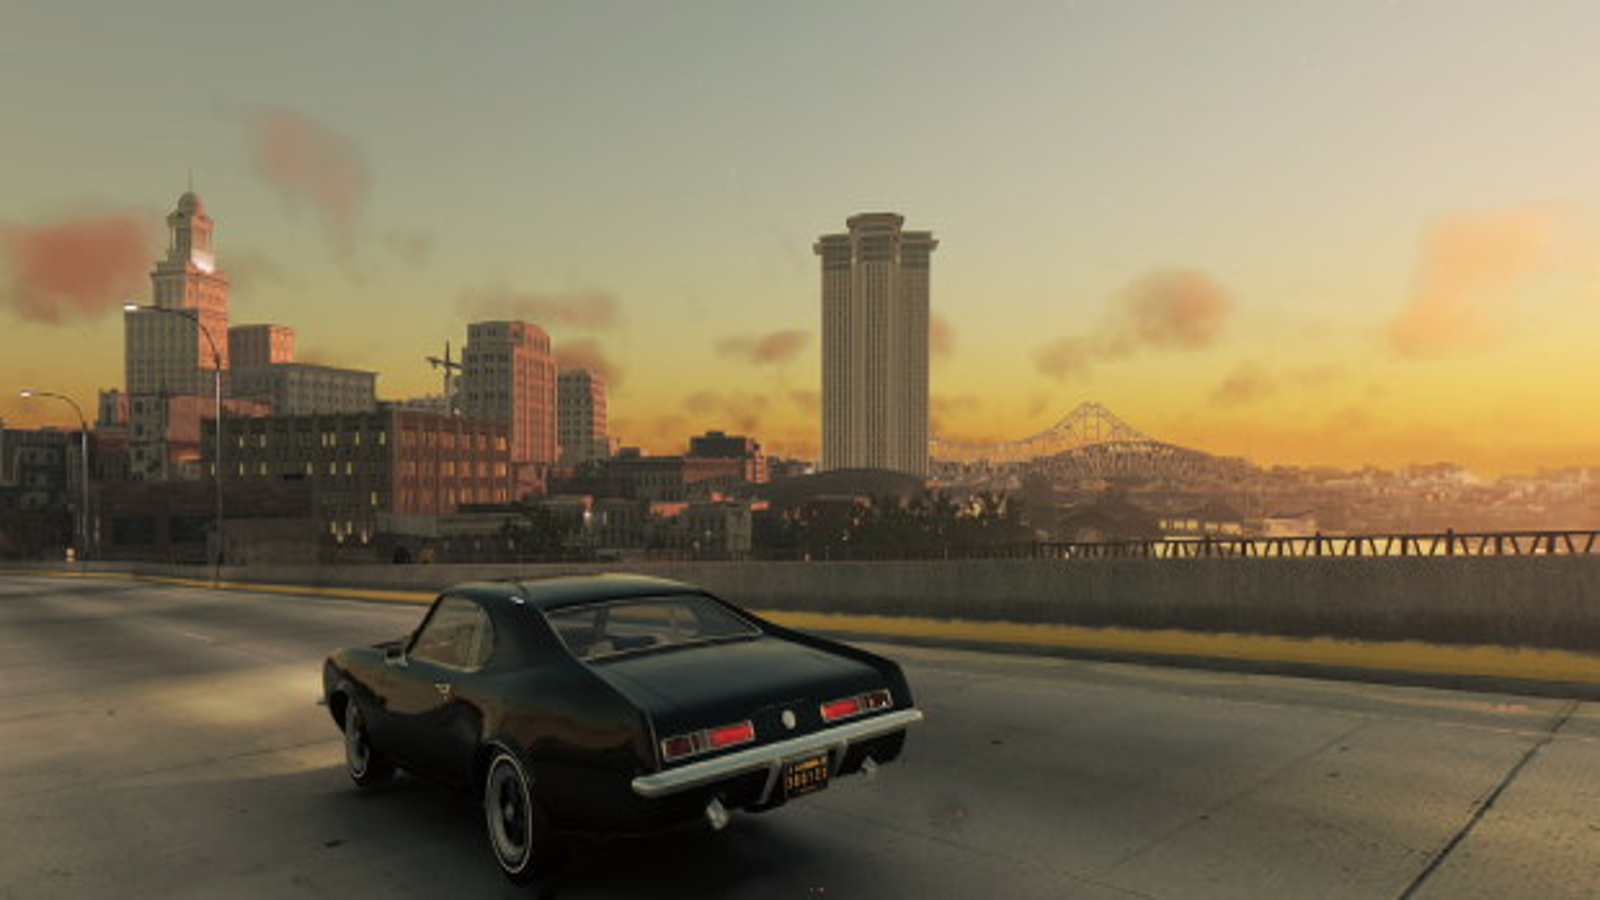 Steam :: Mafia III: Definitive Edition :: Mafia III “Faster, Baby!” DLC Now  Available